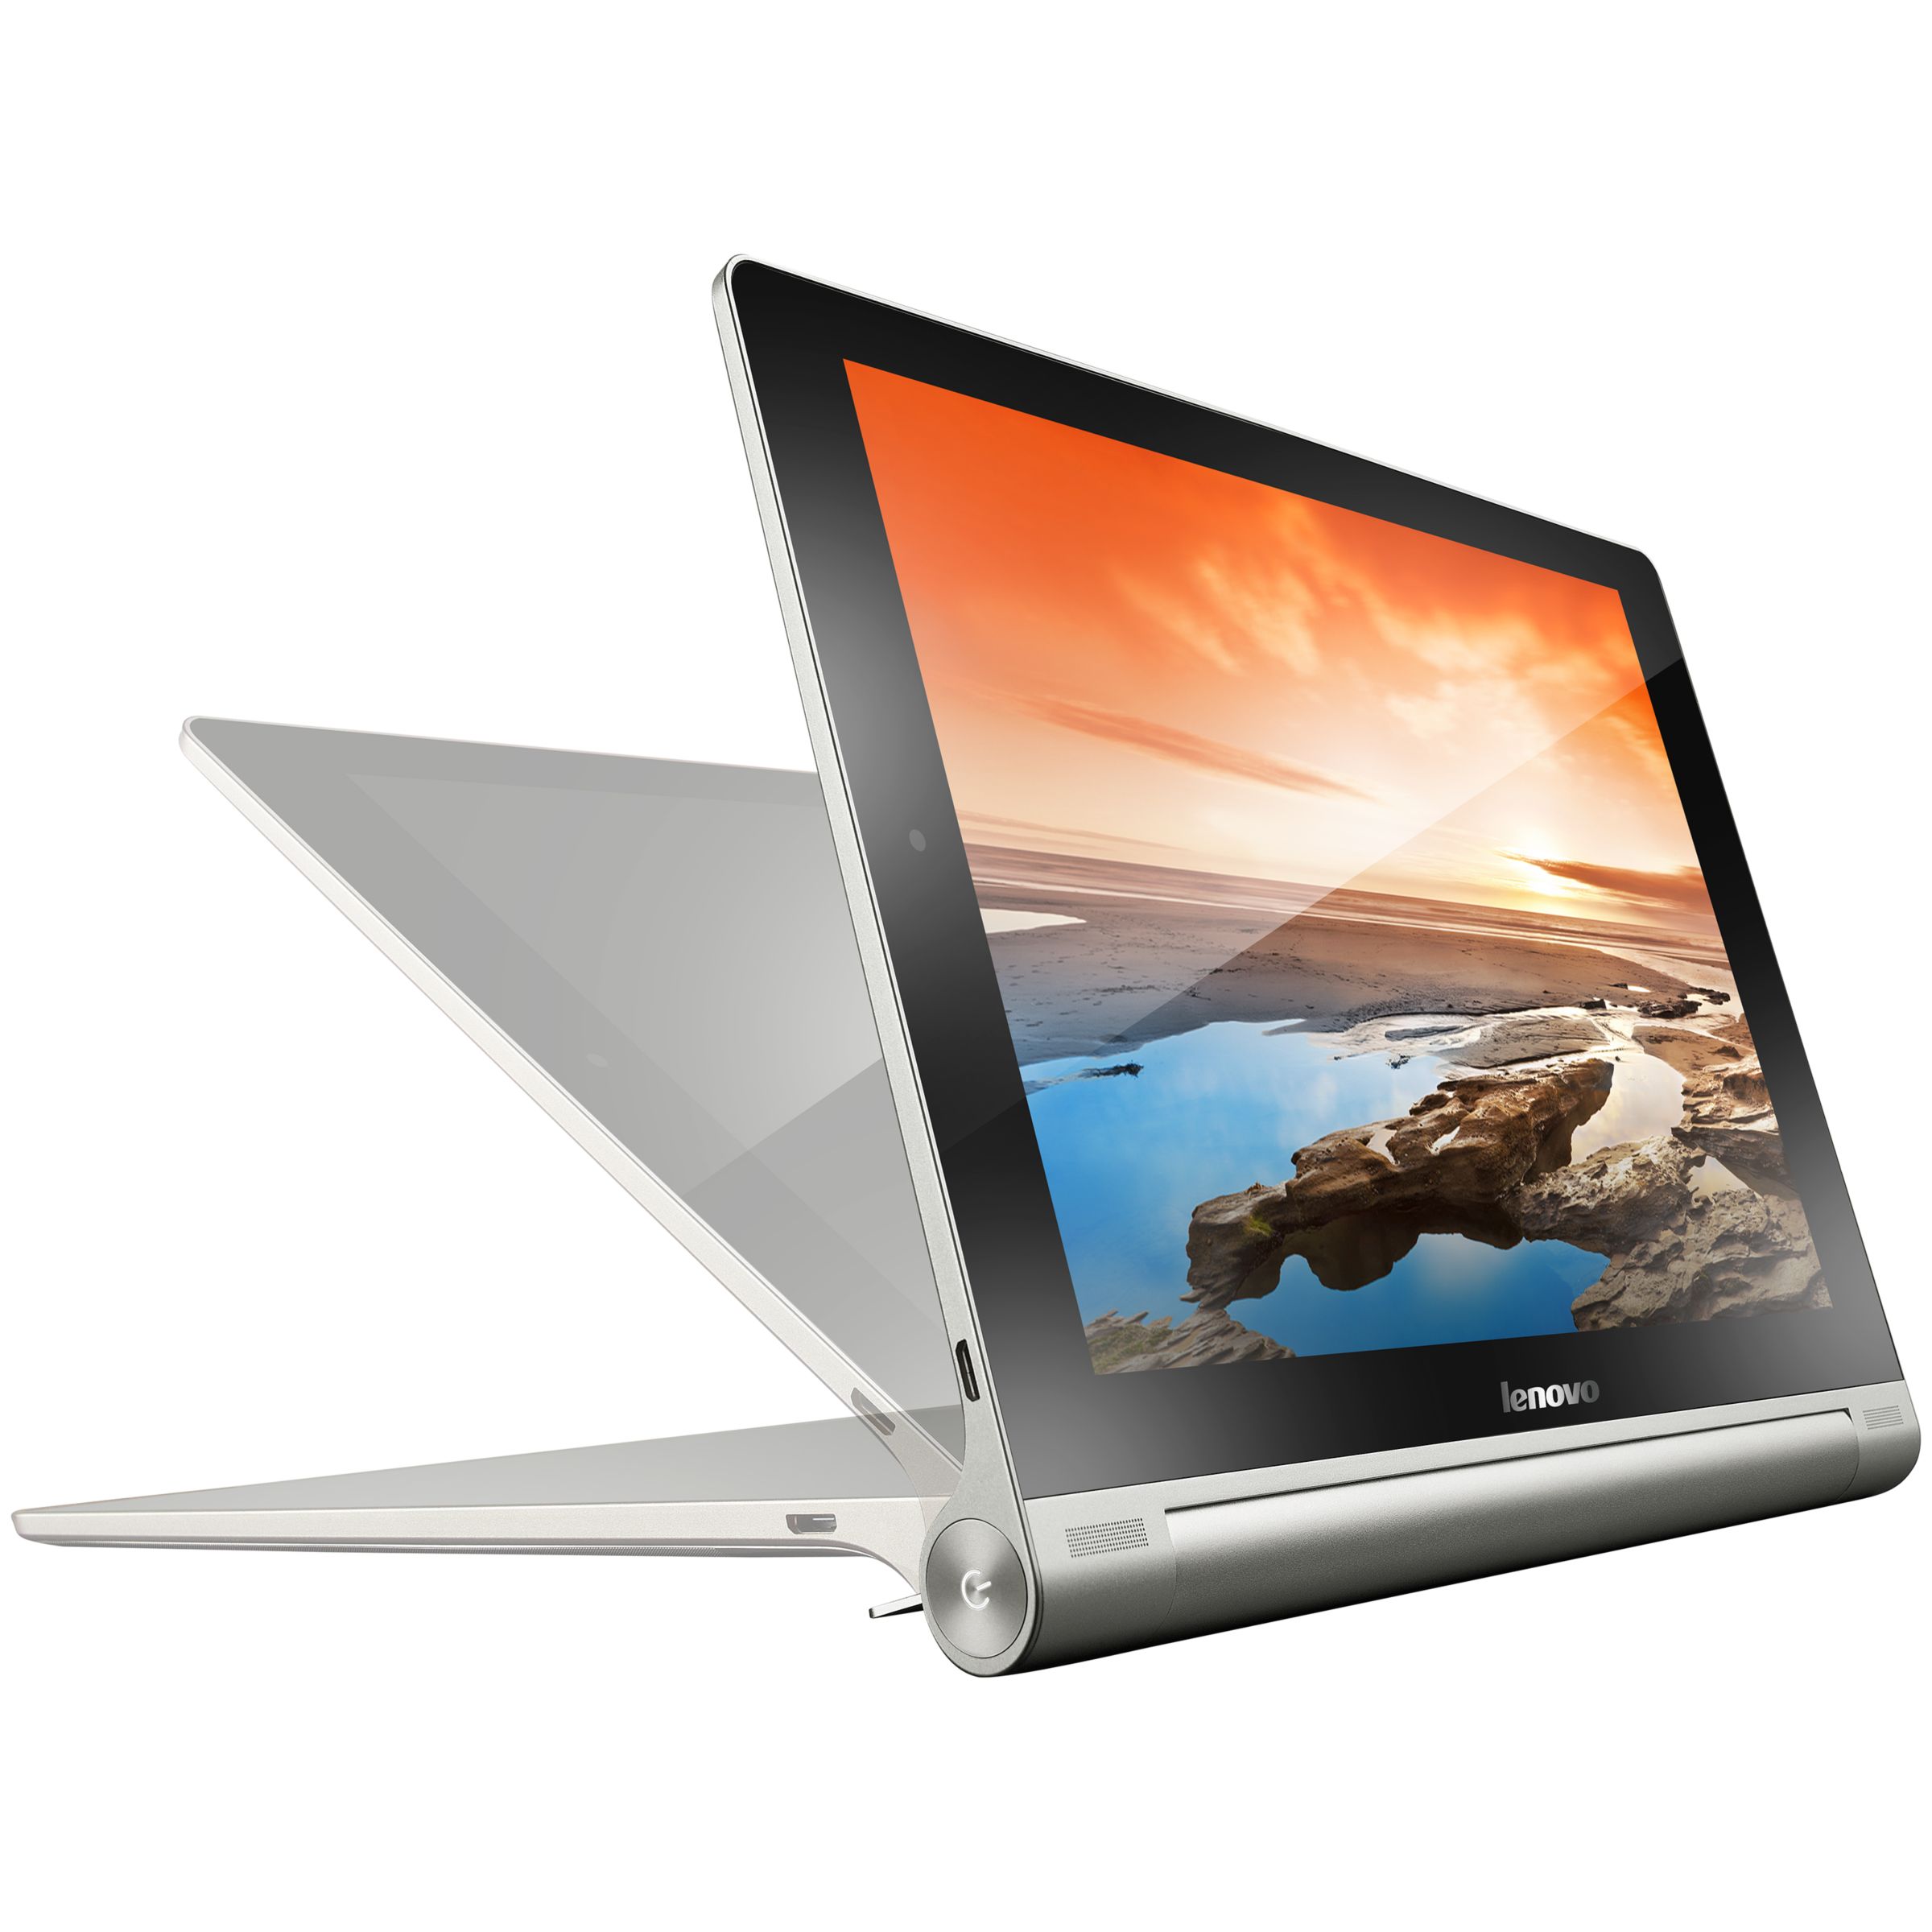 Lenovo Yoga Tablet 8, Quad-core Processor, Android, 8”, Wi-Fi & 3G, 16GB, Silver